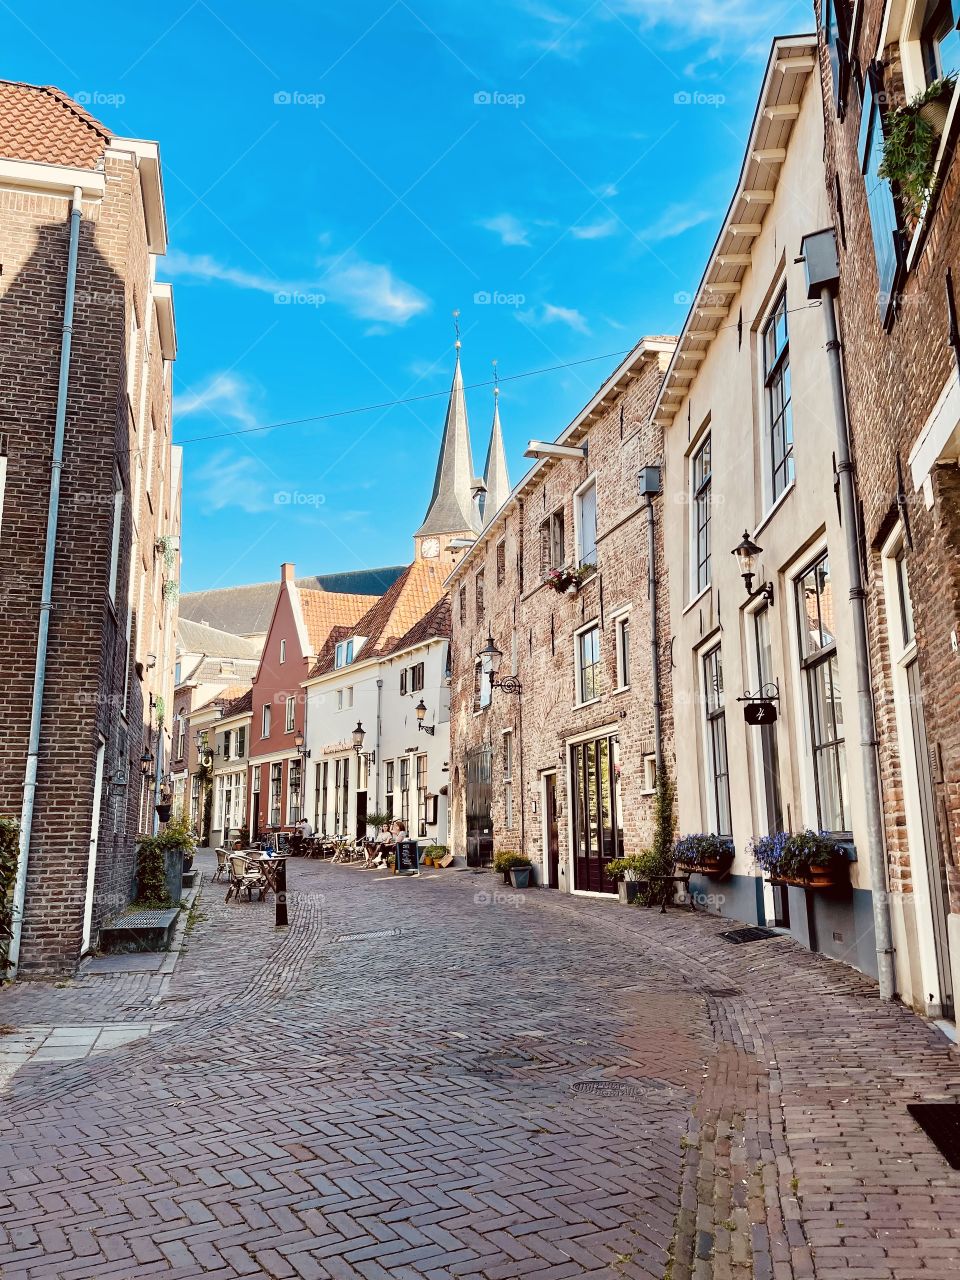 The Netherlands,Deventer 